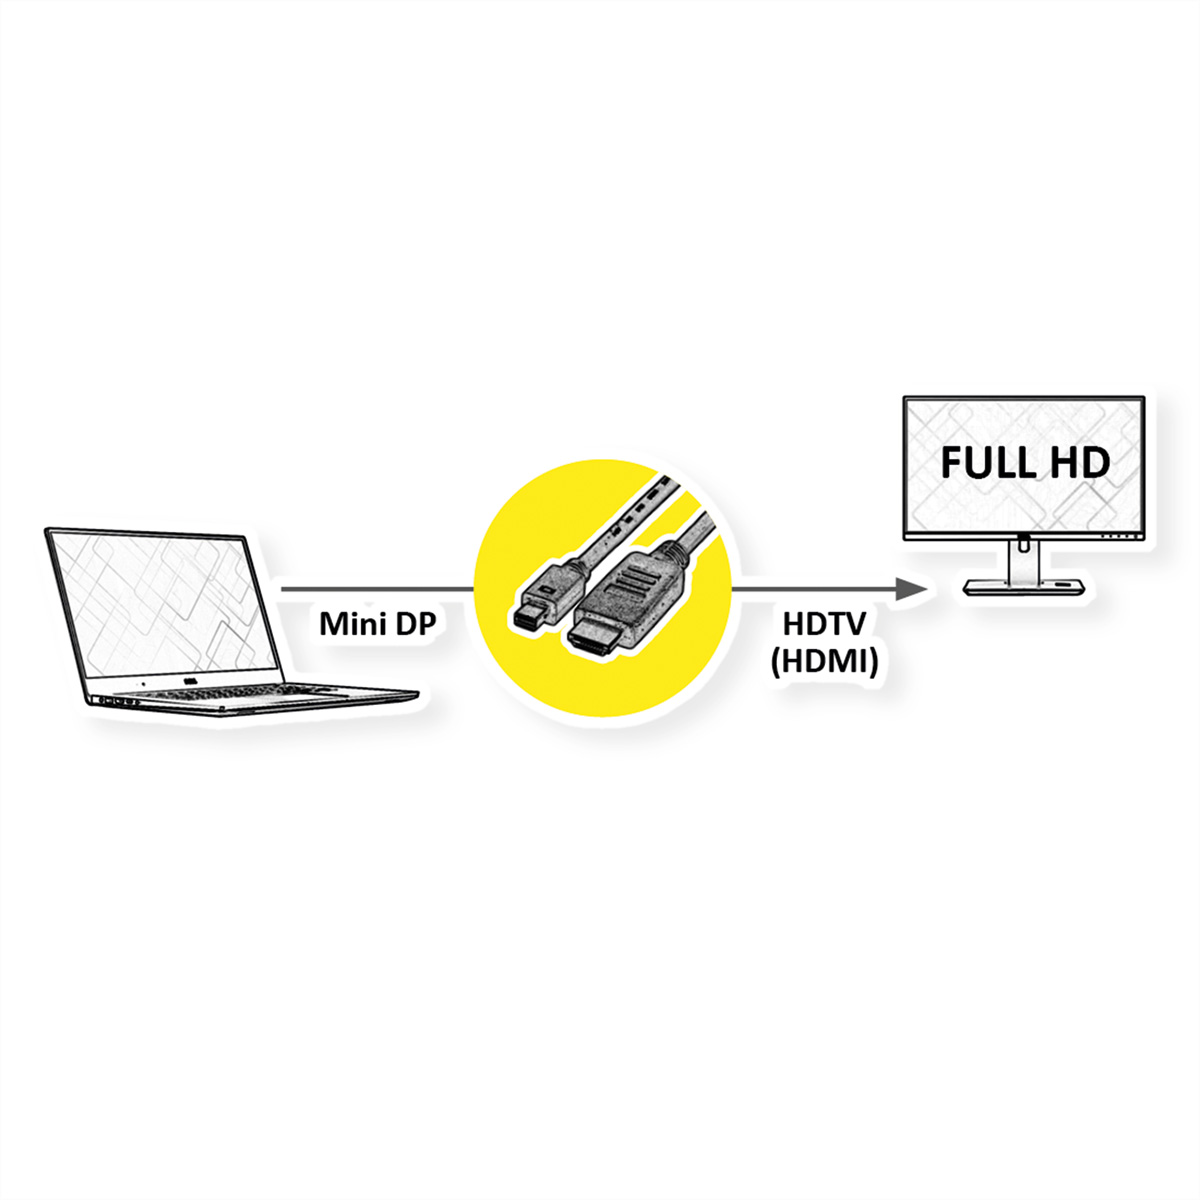 VALUE Mini DisplayPort Kabel, DisplayPort DP-HDTV, Kabel, 1 ST/ST, Mini m